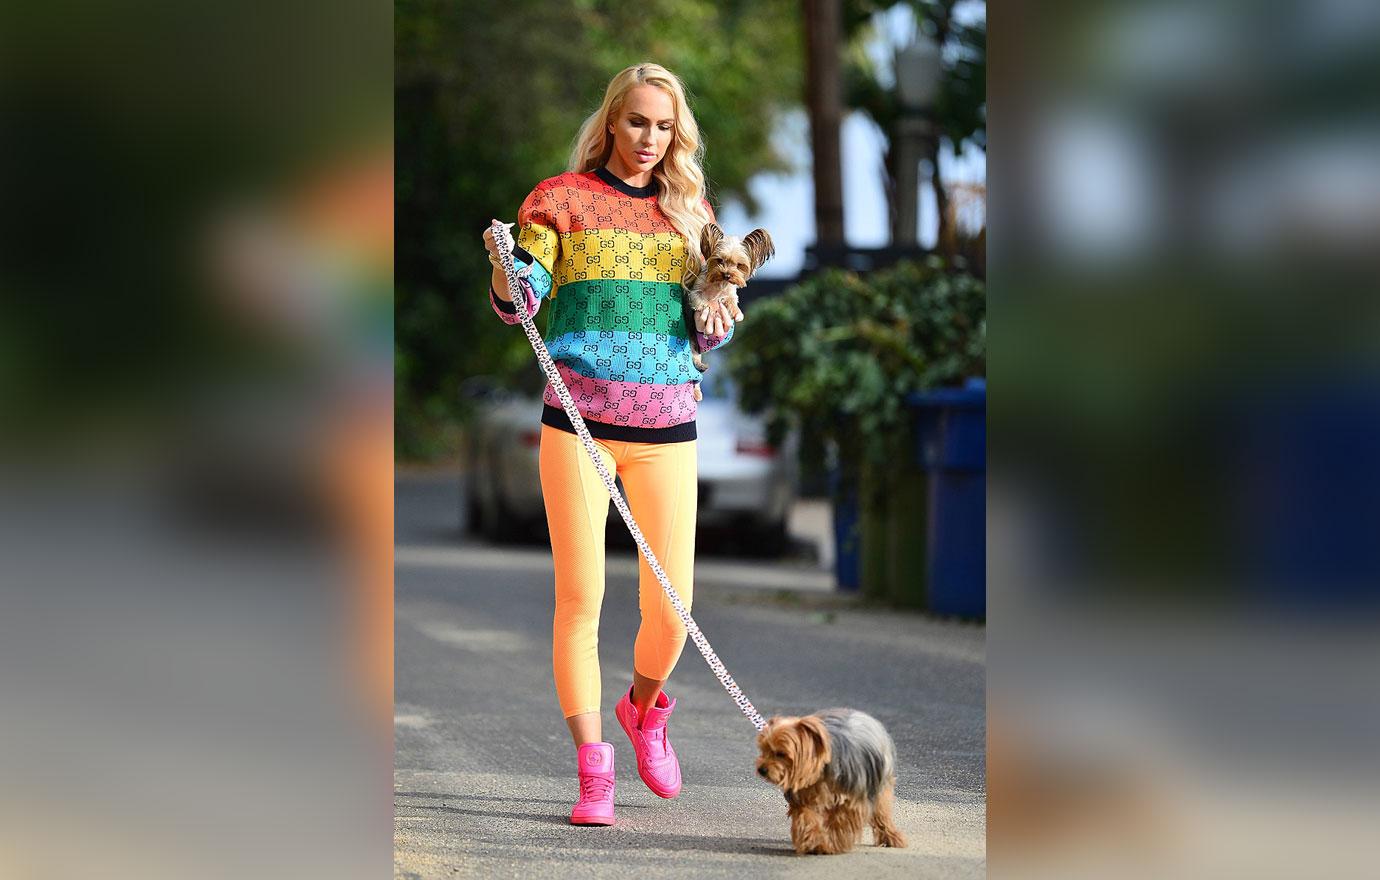 Selling Sunset' Star Christine Quinn Wears Rainbow Sweater: Photos